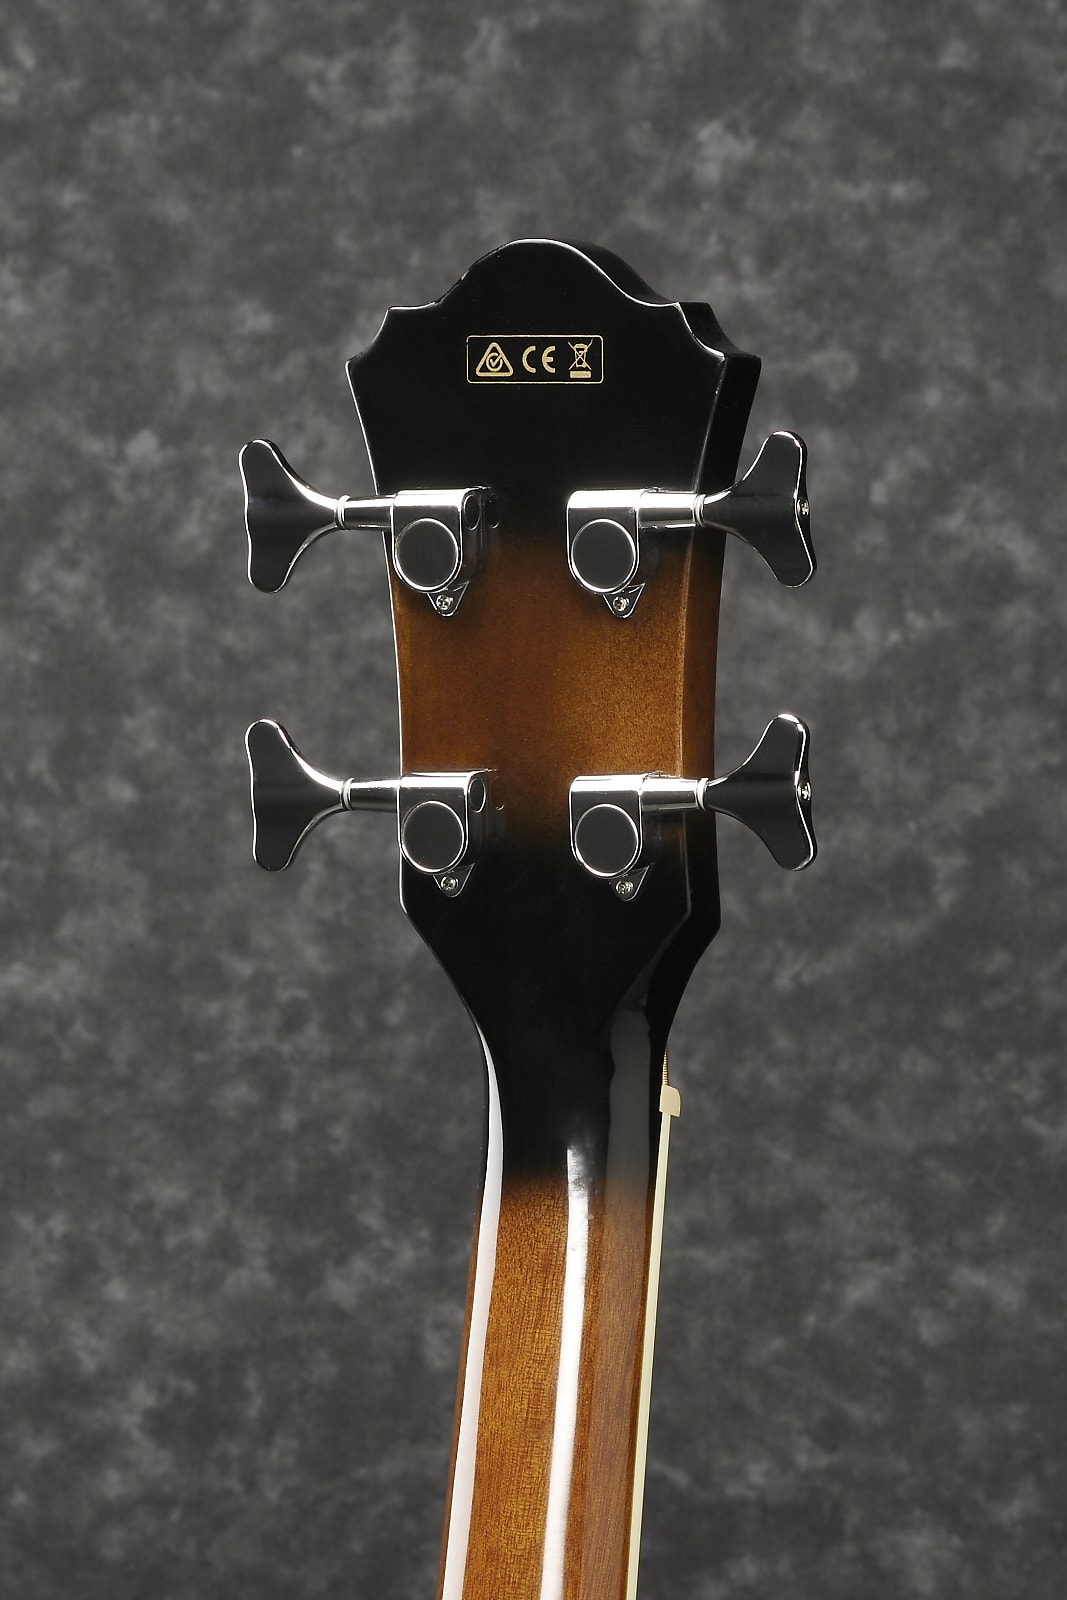 Ibanez AEB10E Acoustic-Electric Bass Guitar Dark Violin Sunburst High Gloss